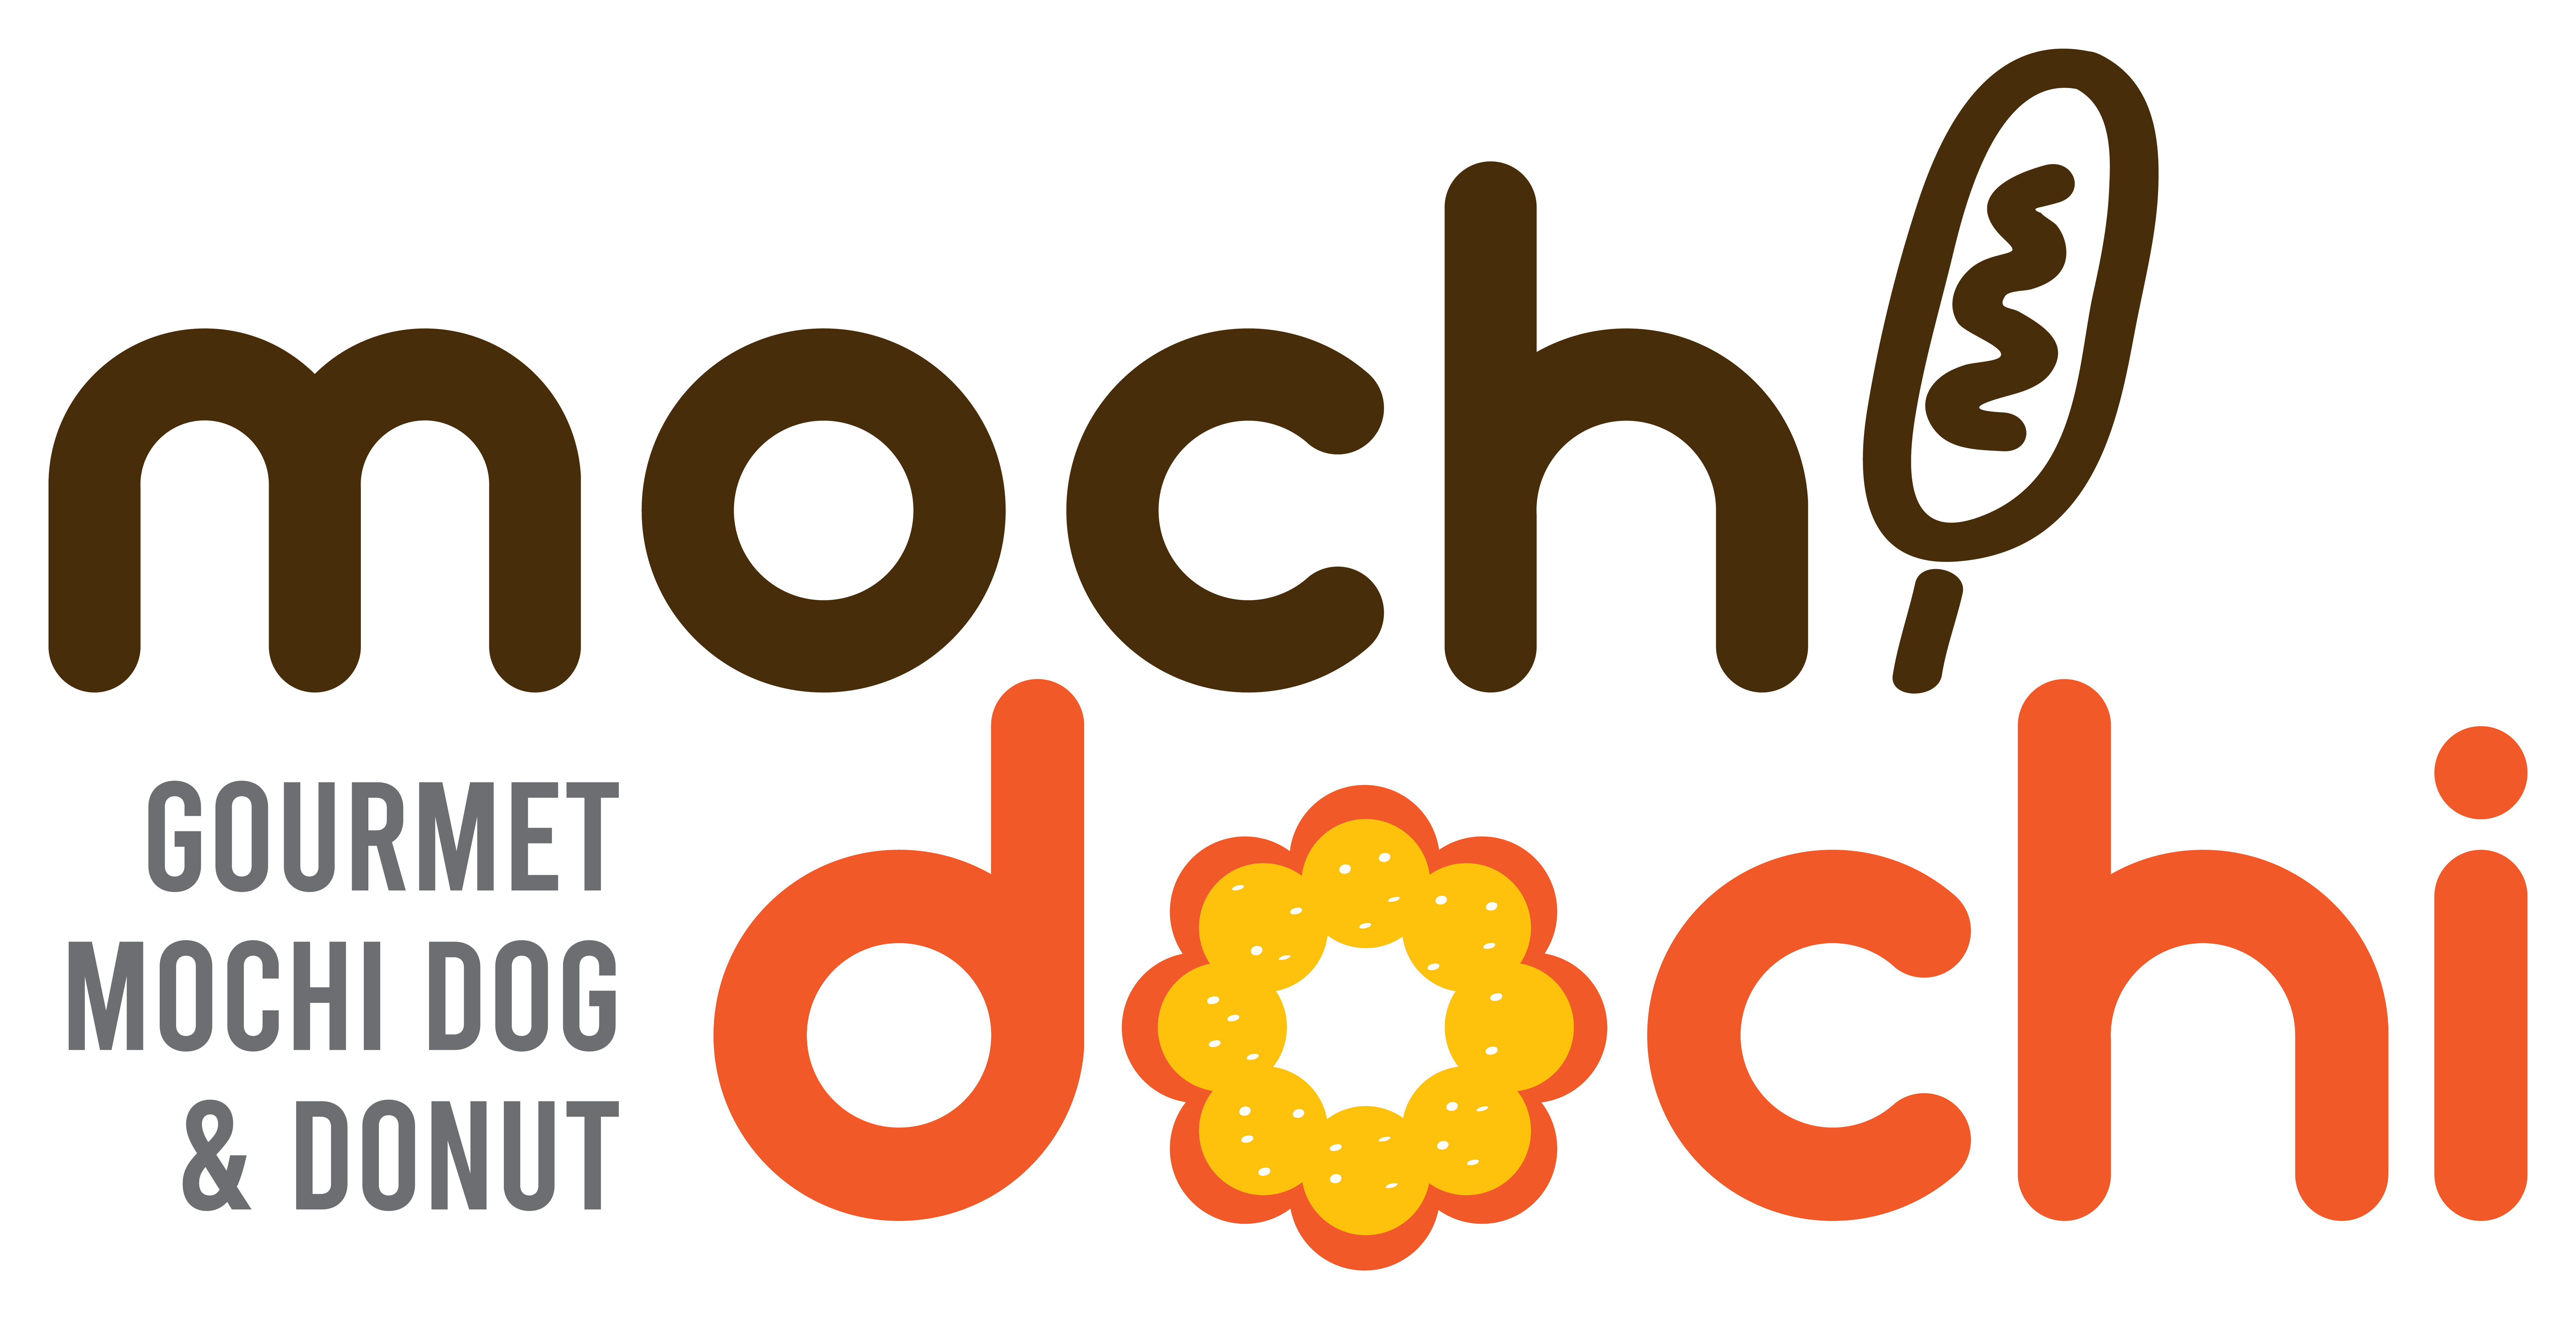 Mochi Dochi| Mochi Dog & Mochi Donut